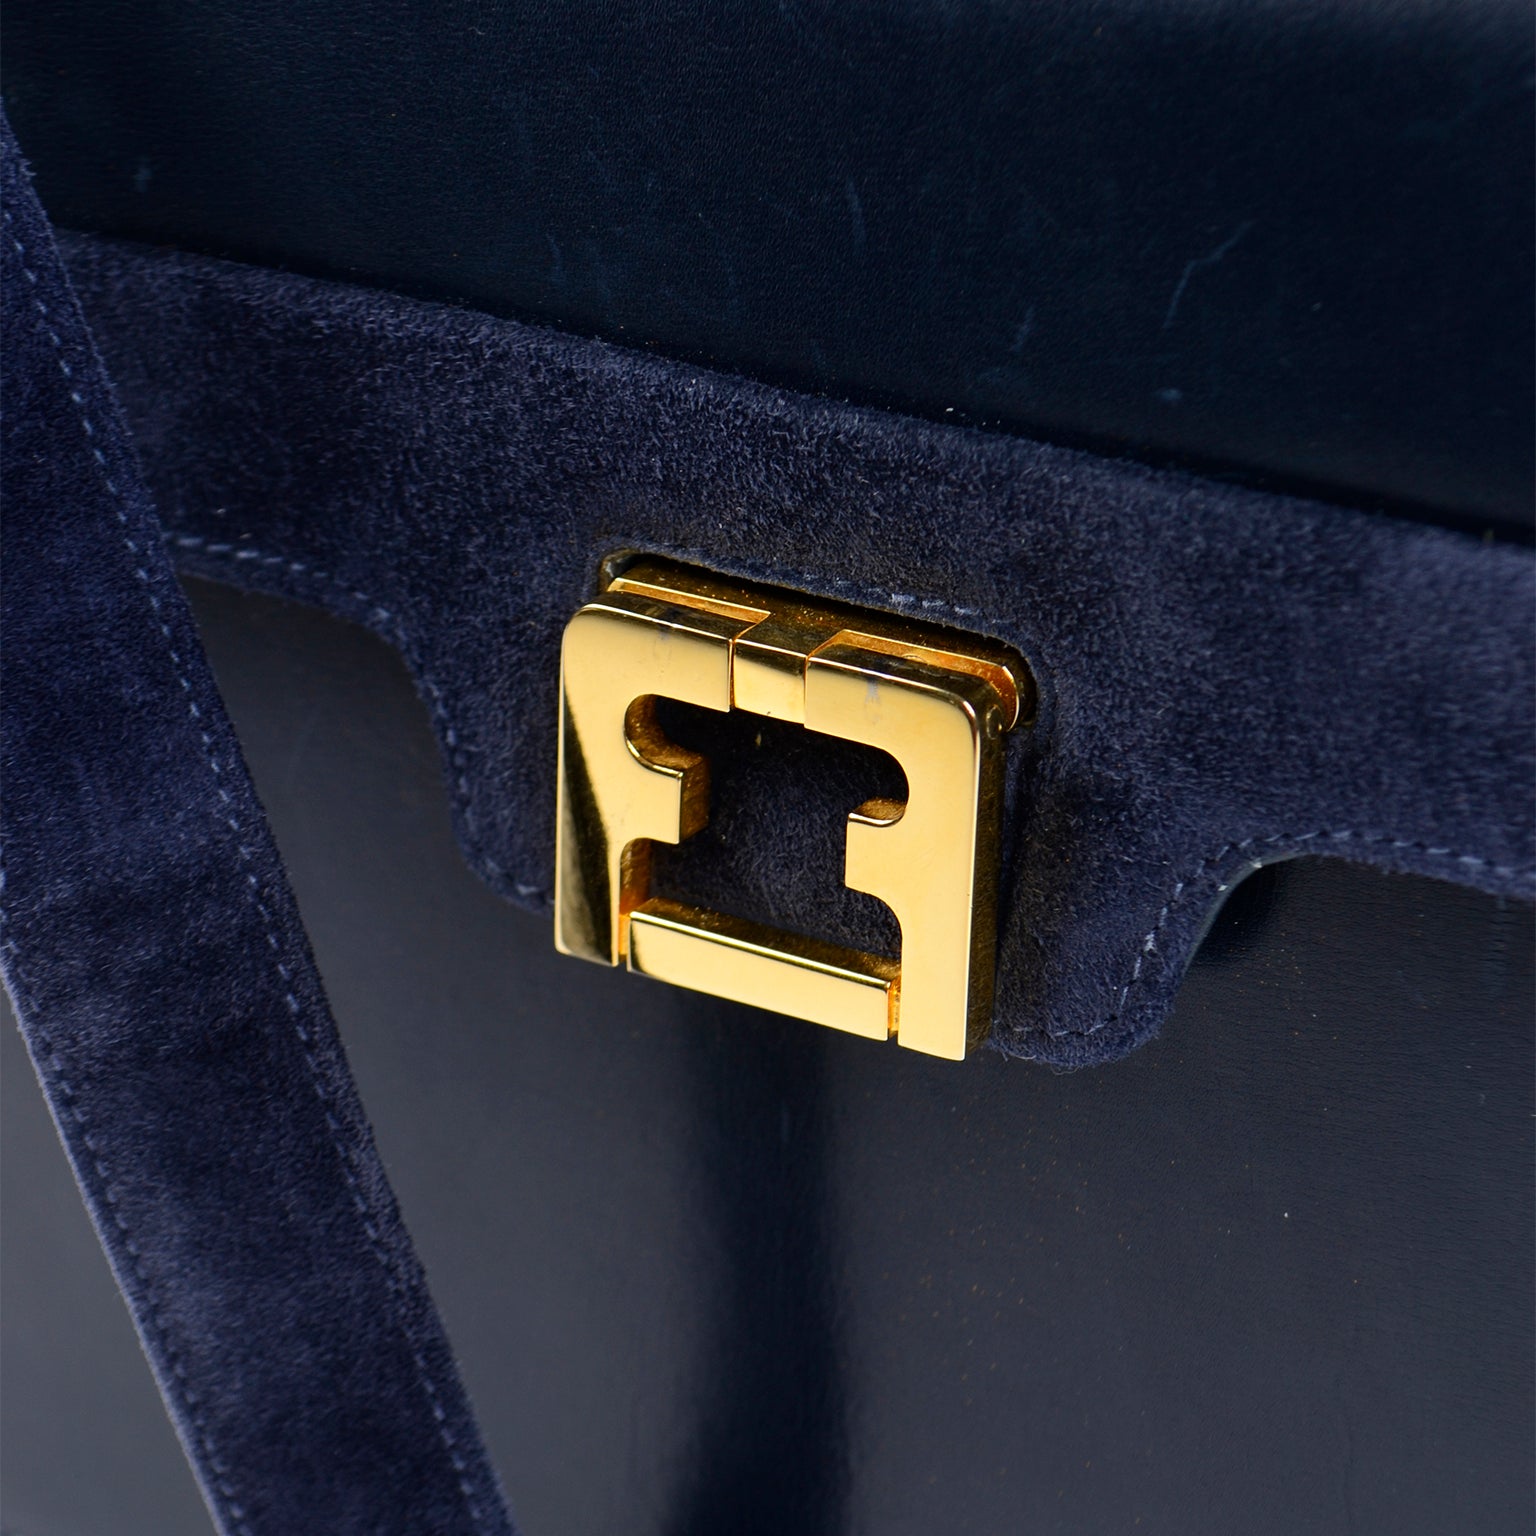 New Dooney & Bourke Suede Tasha Drawstring Shoulder Bag Purse in Navy Blue  | eBay